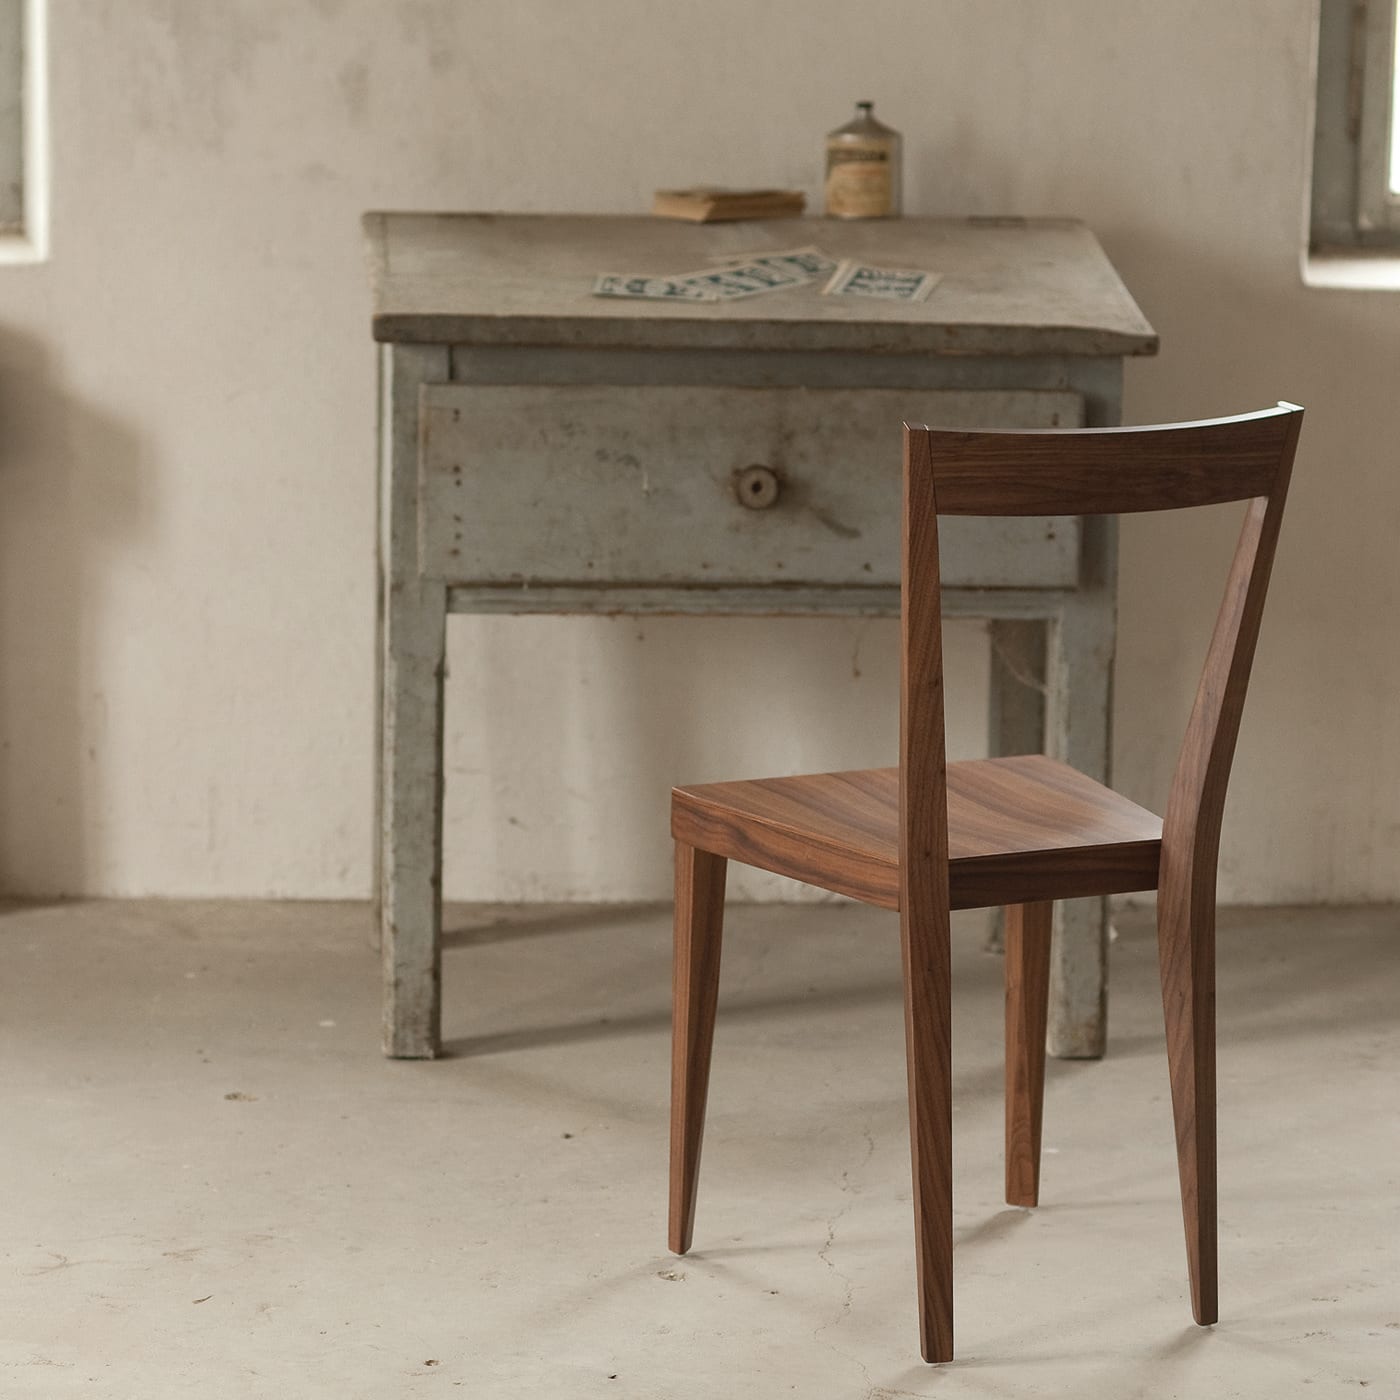 Set of 2 Livia Chairs in Dark Walnut Finish by Giò Ponti - L'Abbate